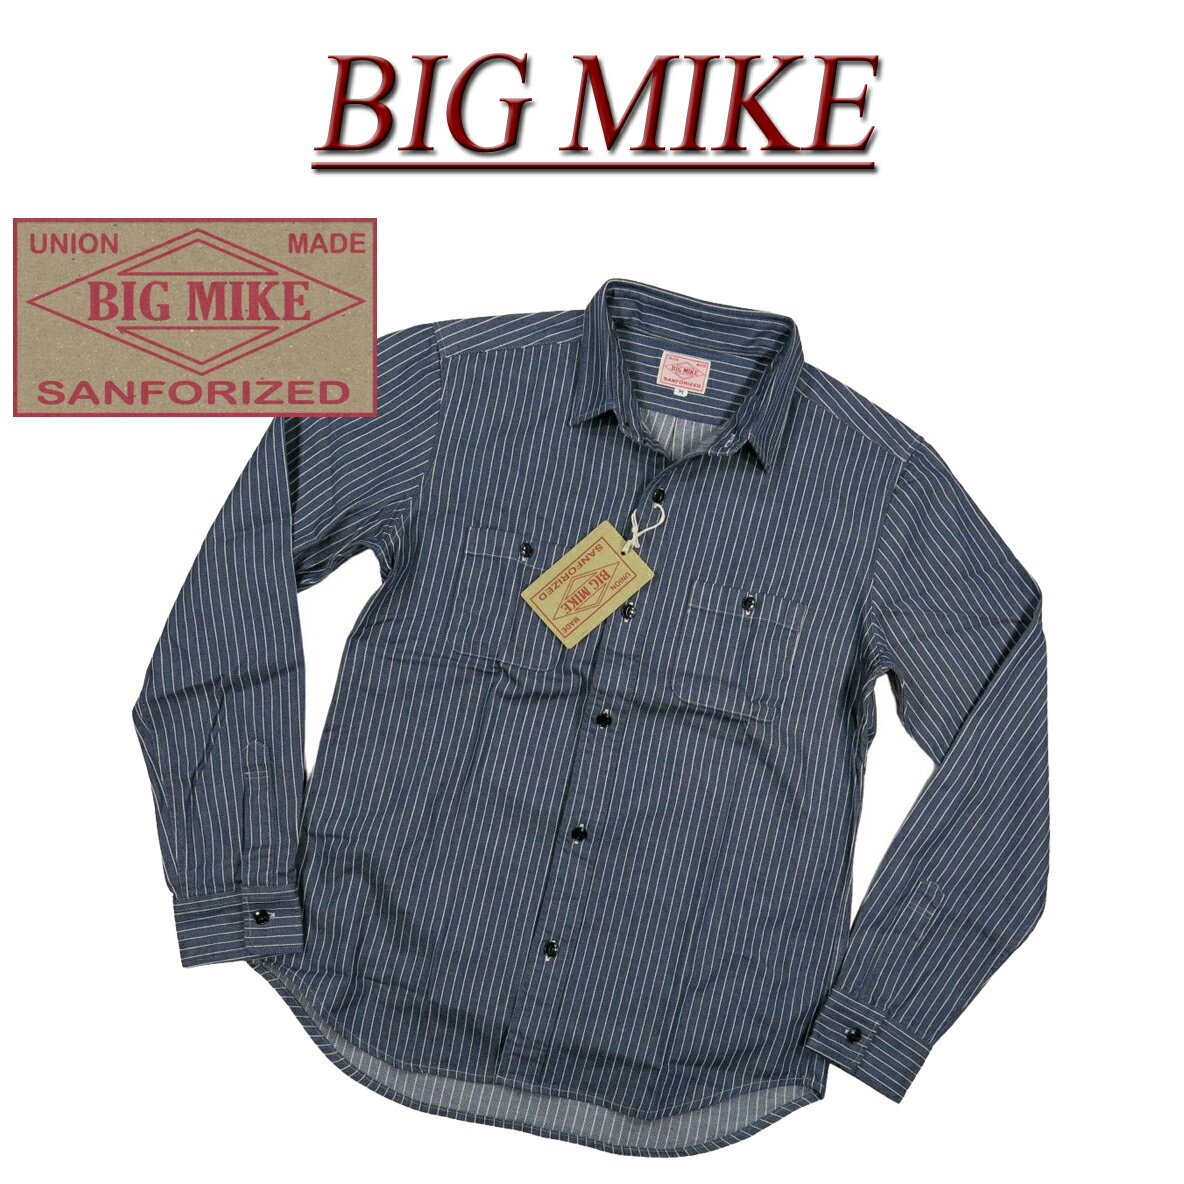  ac842 新品 BIG MIKE 復刻 日本製 肉厚 ヒッコリーストライプ 長袖 ワークシャツ 101815005 メンズ ビッグマイク HICKORY STRIPES WORK SHIRTS BIGMIKE Made in JAPAN 